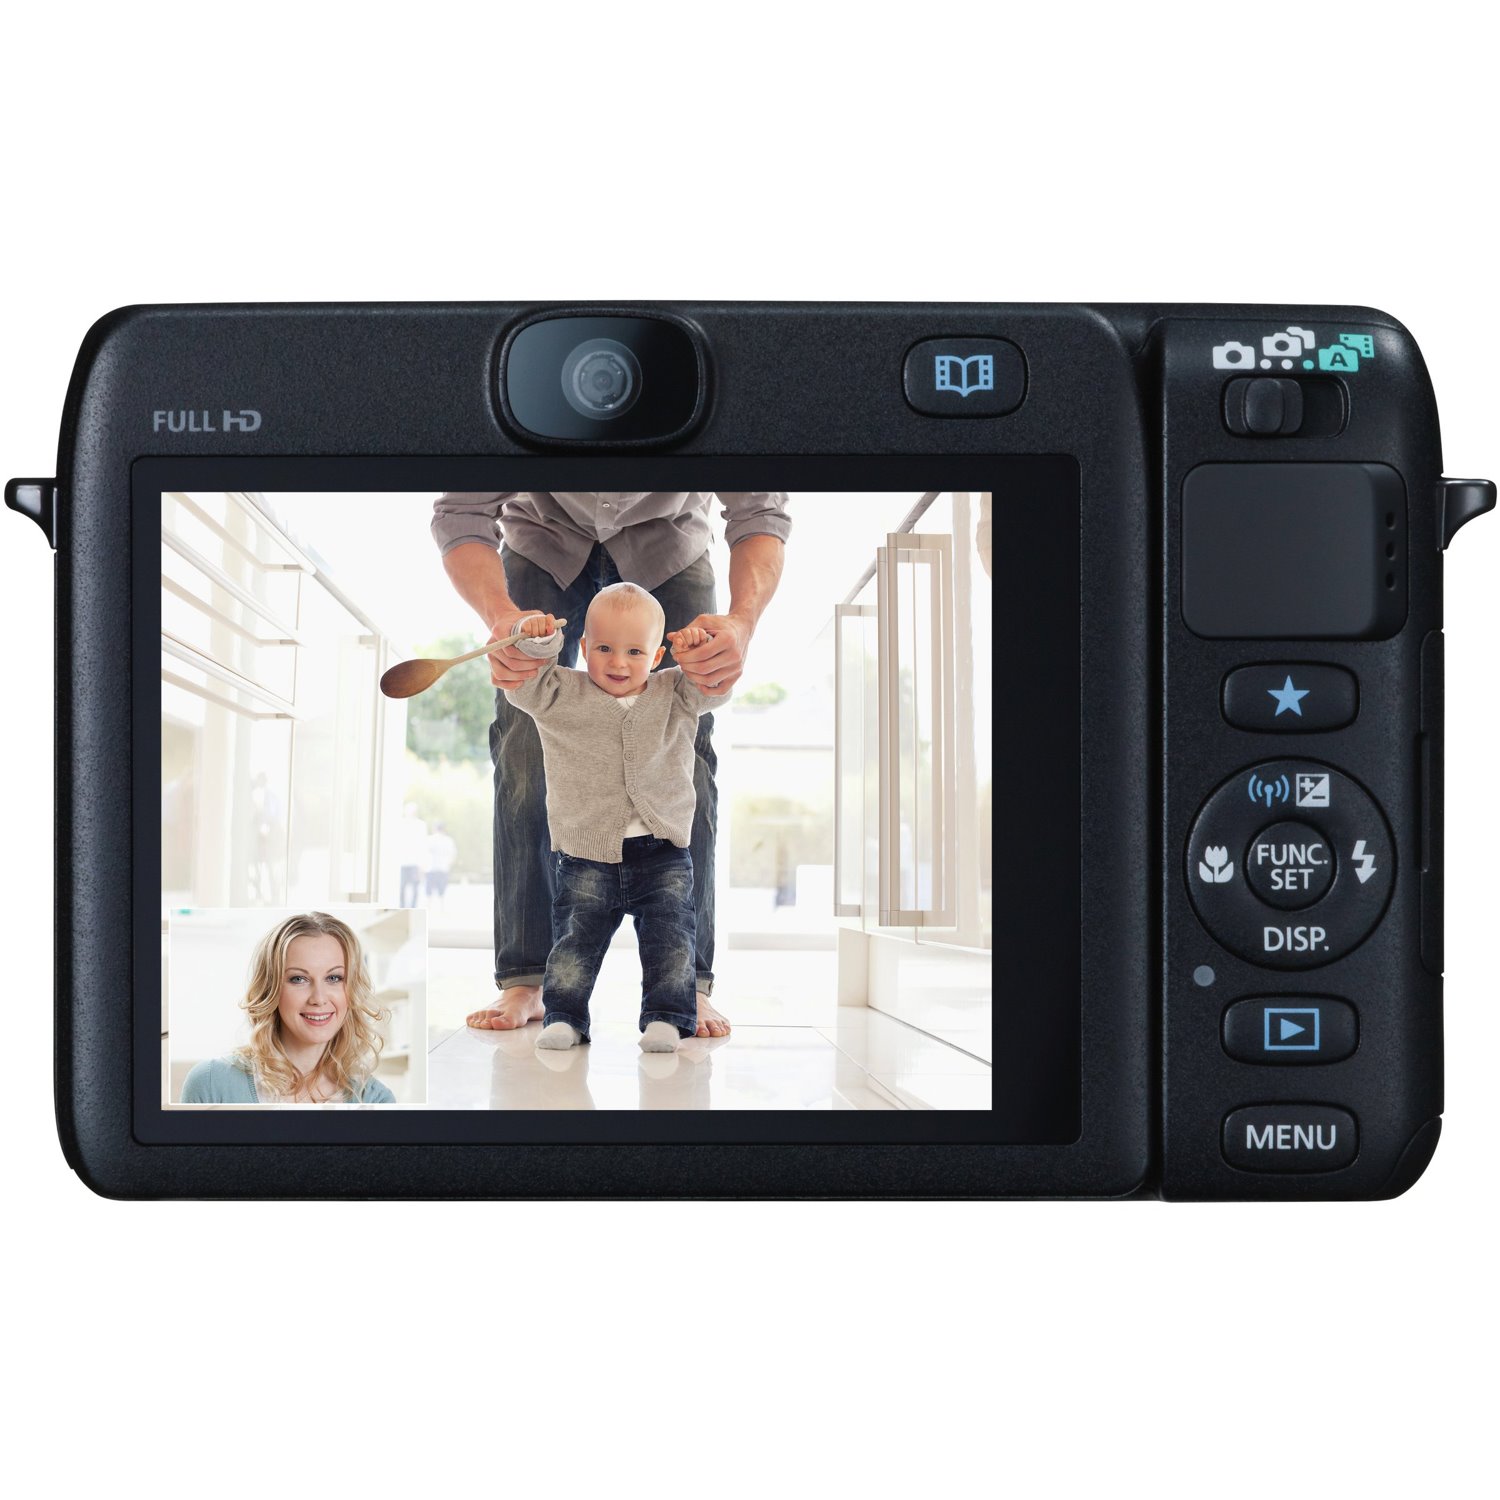 Canon PowerShot N100 12.1 Megapixel Compact Camera - Black